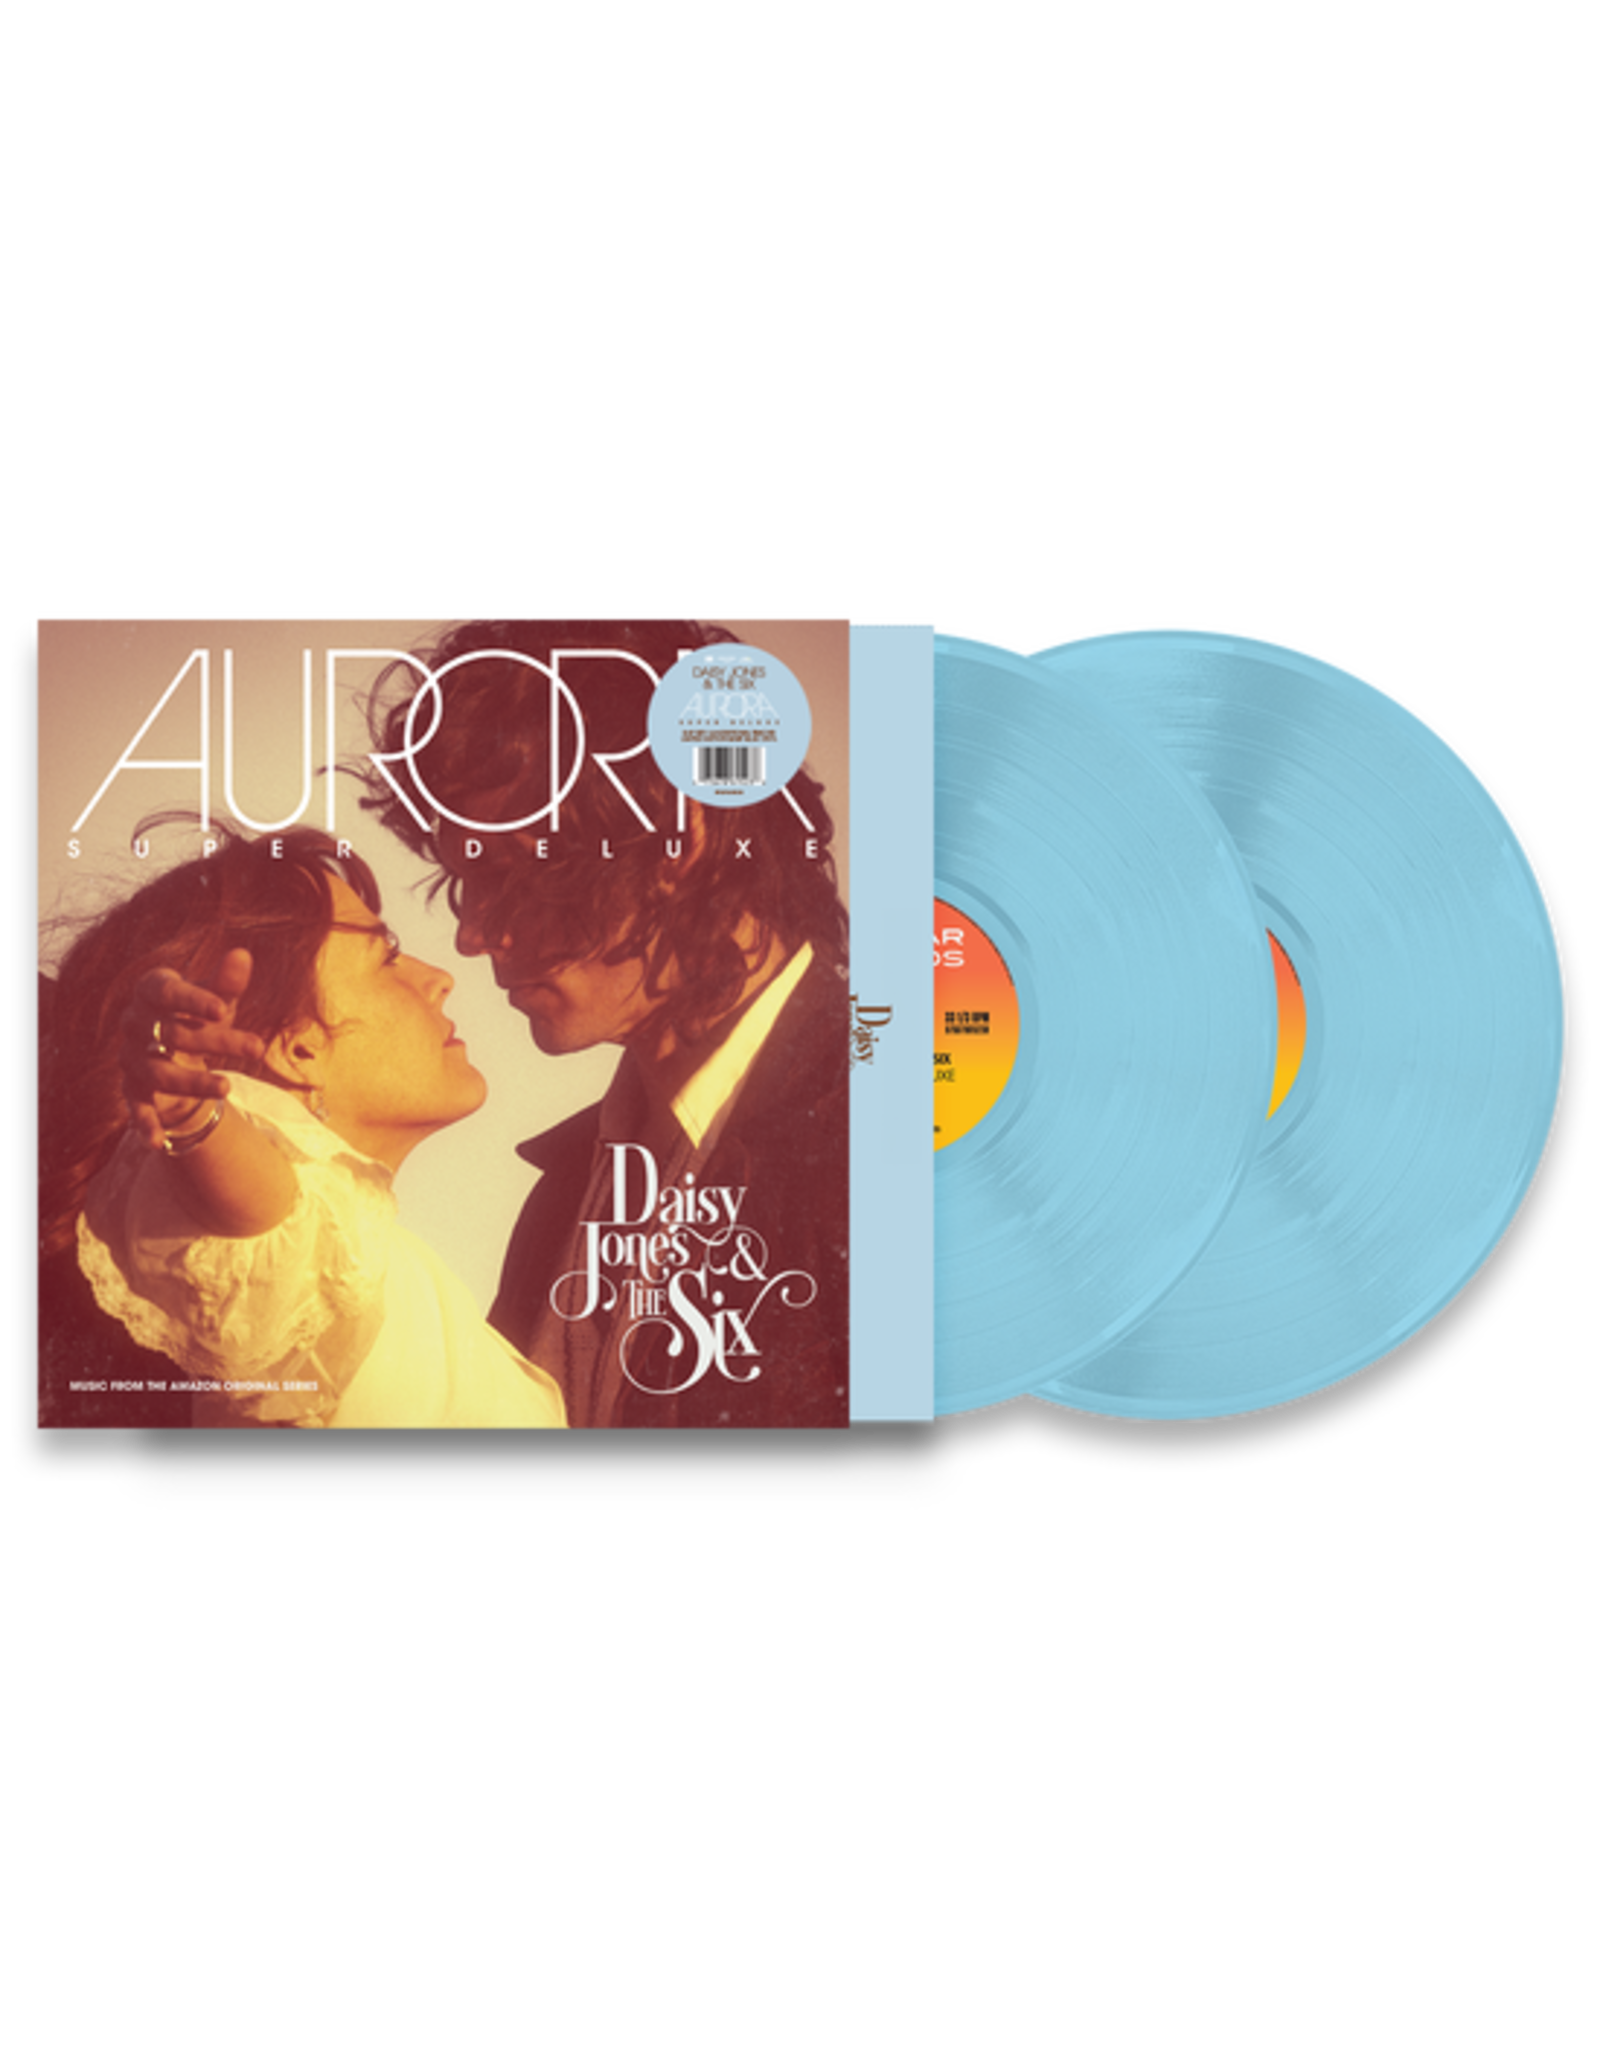 Daisy Jones & The Six - Aurora (Super Deluxe) [Baby Blue Vinyl] - Pop Music